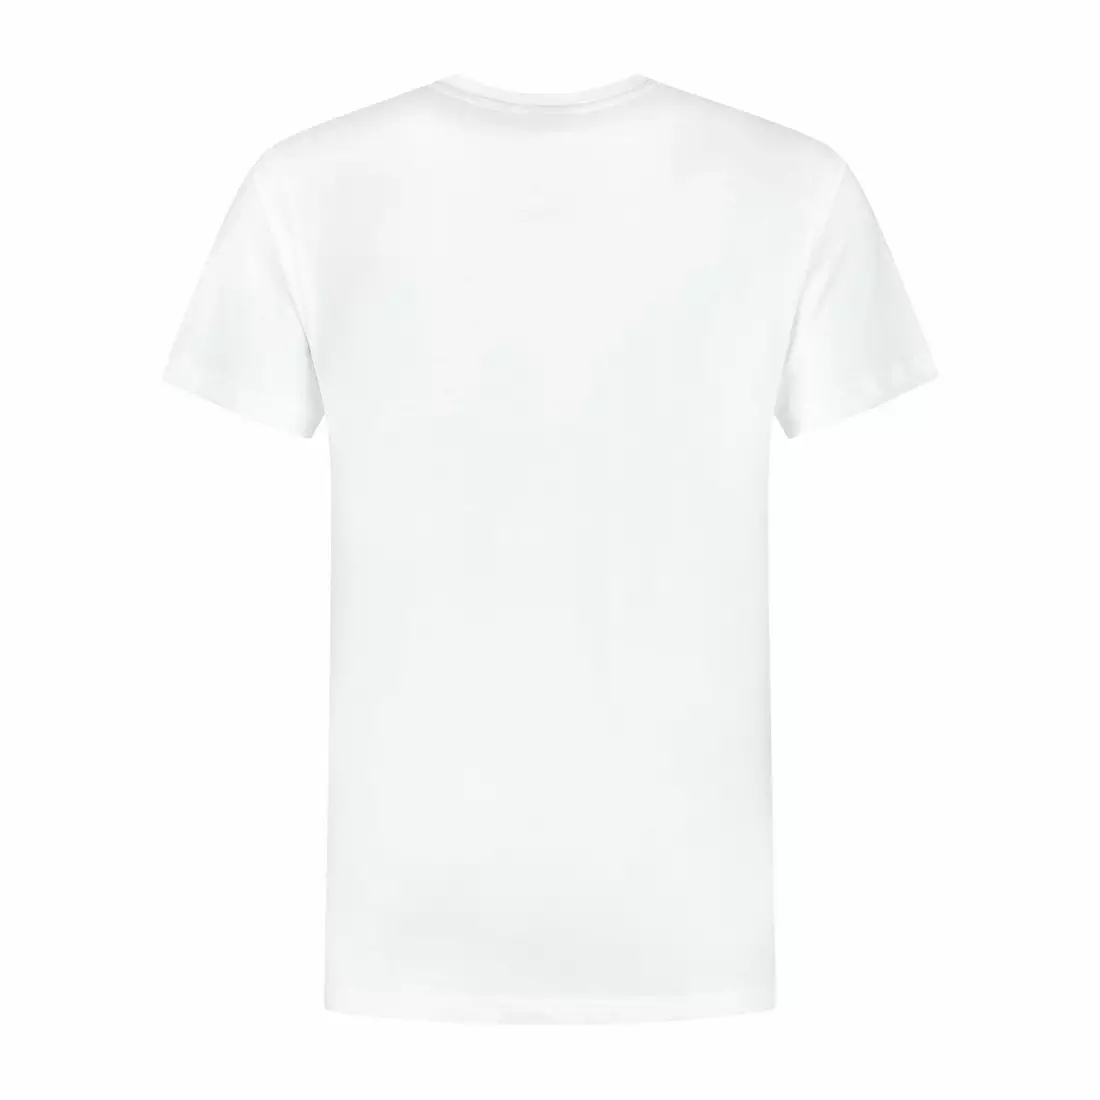 Rogelli t-shirt męski GRAPHIC biały